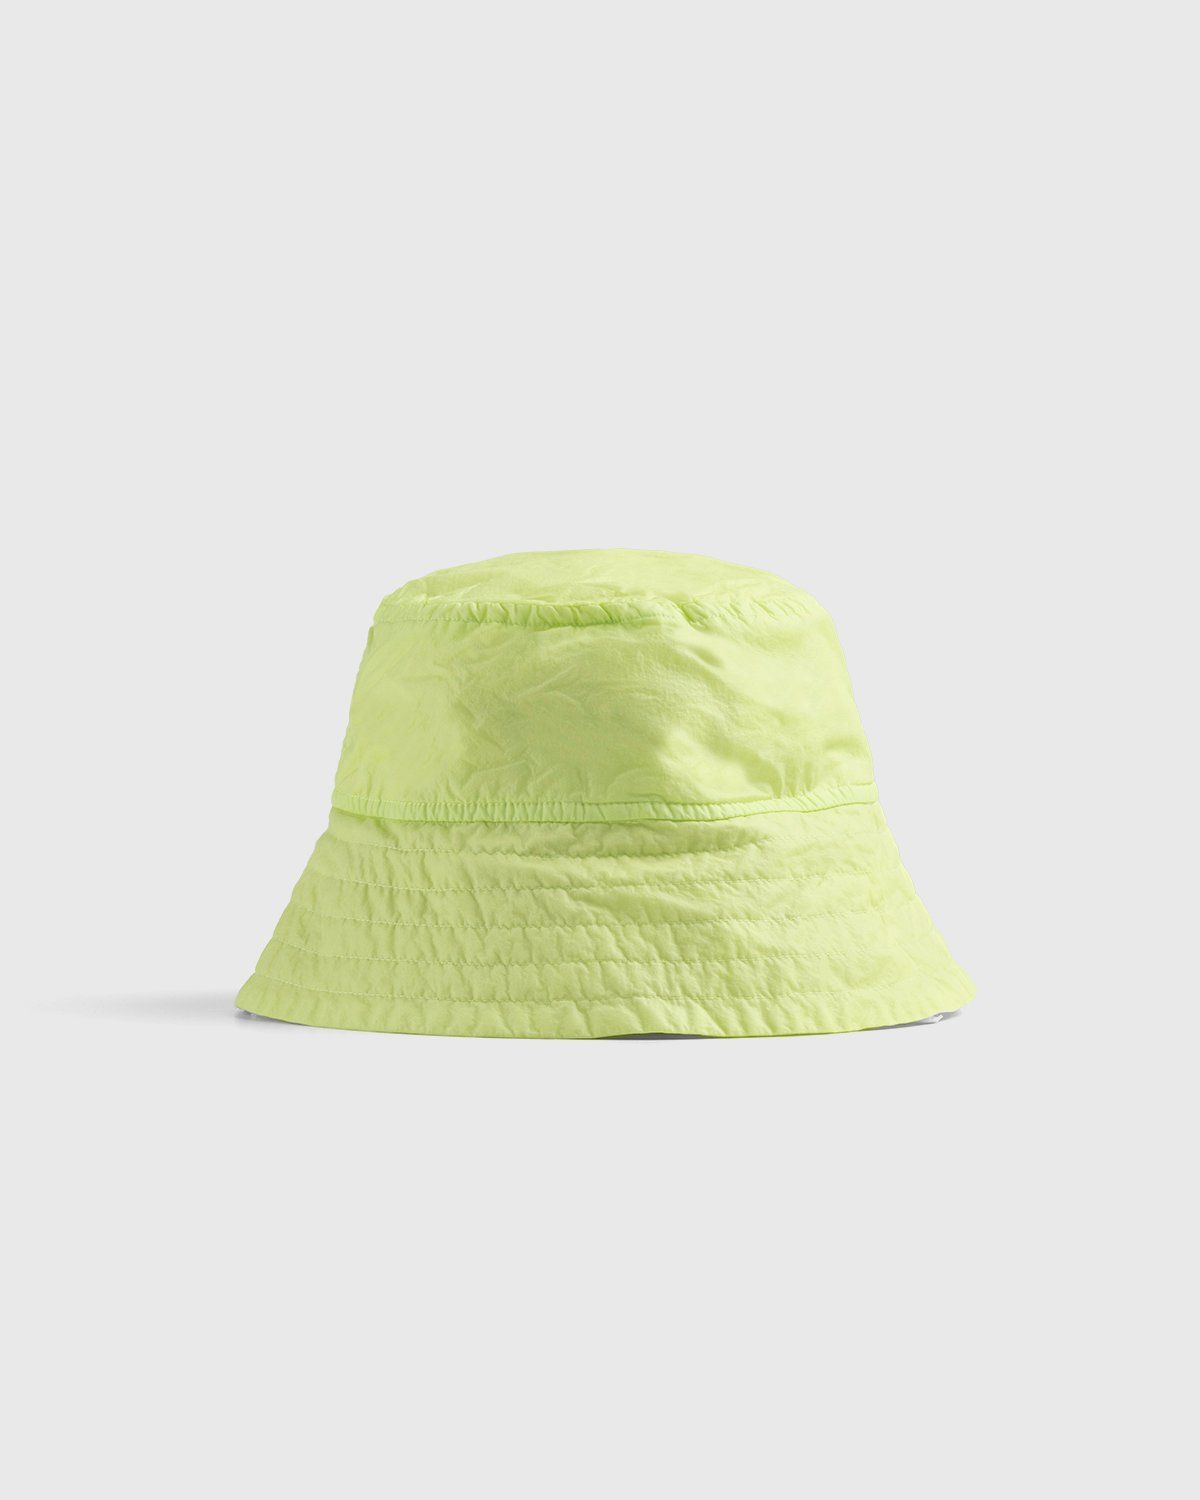 Dries Van Noten – Gilly Hat Lime - Image 2